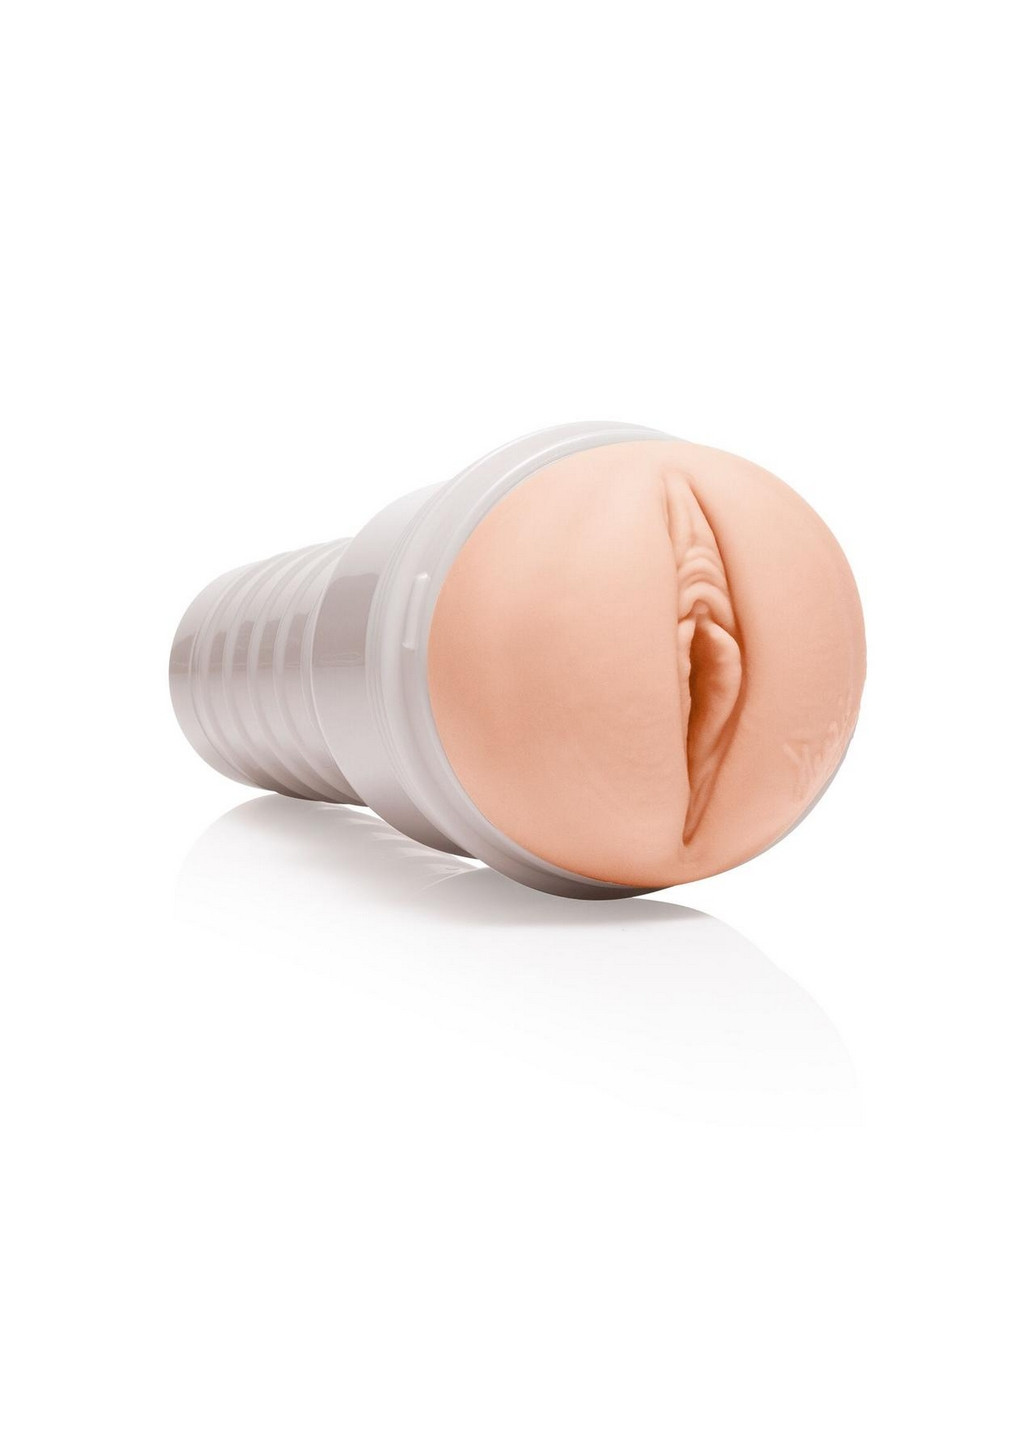 Мастурбатор Girls: Kenzie Reeves - Cream Puff, со слепка вагины, очень нежный Fleshlight (260449926)